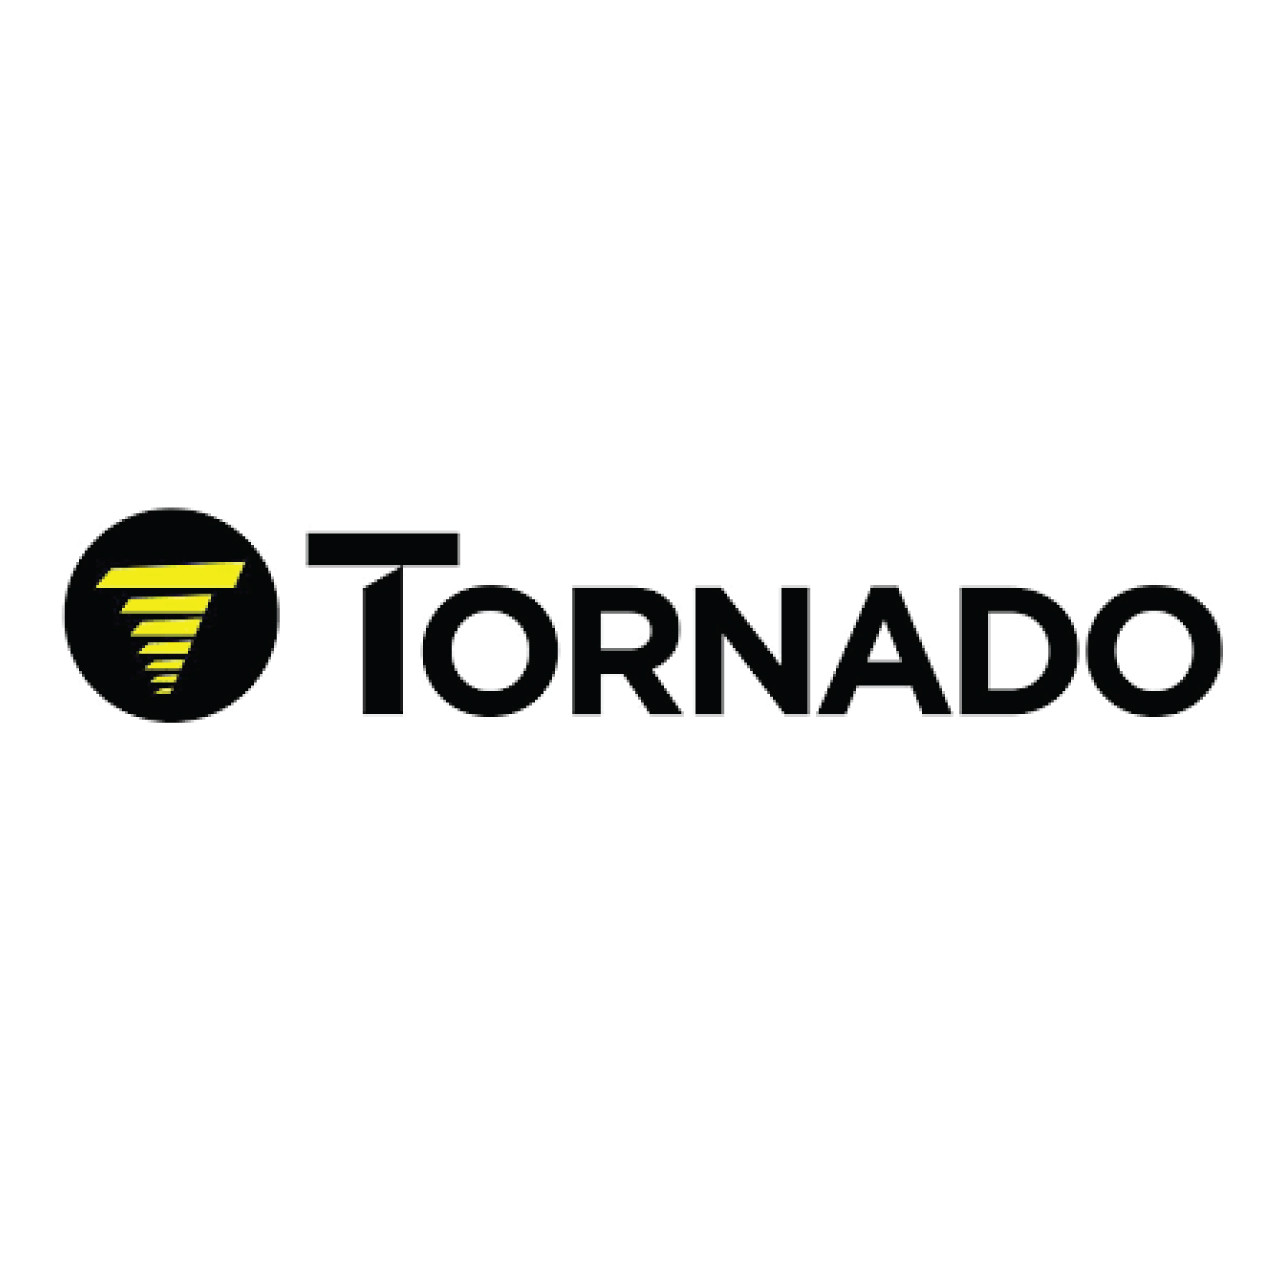 02-3465-0000, Tornado 02-3465-0000, Tornado SCREW, Tornado parts